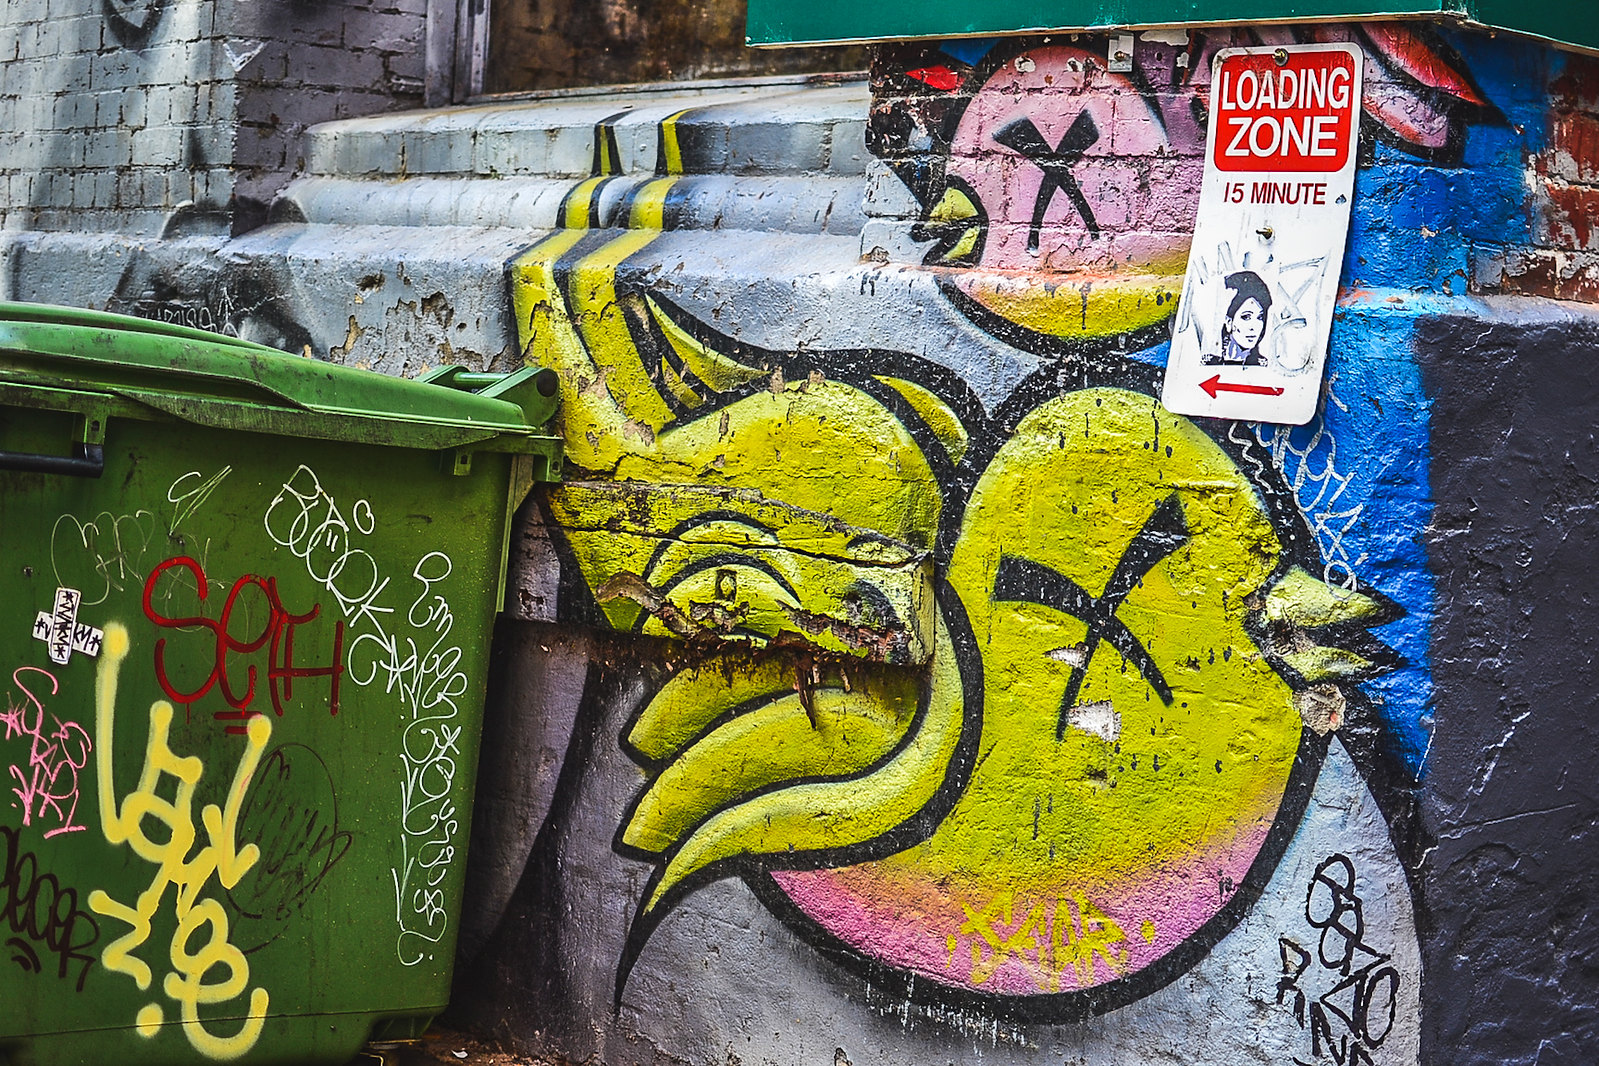 Melbourne Drewery Lane Street Art 2015